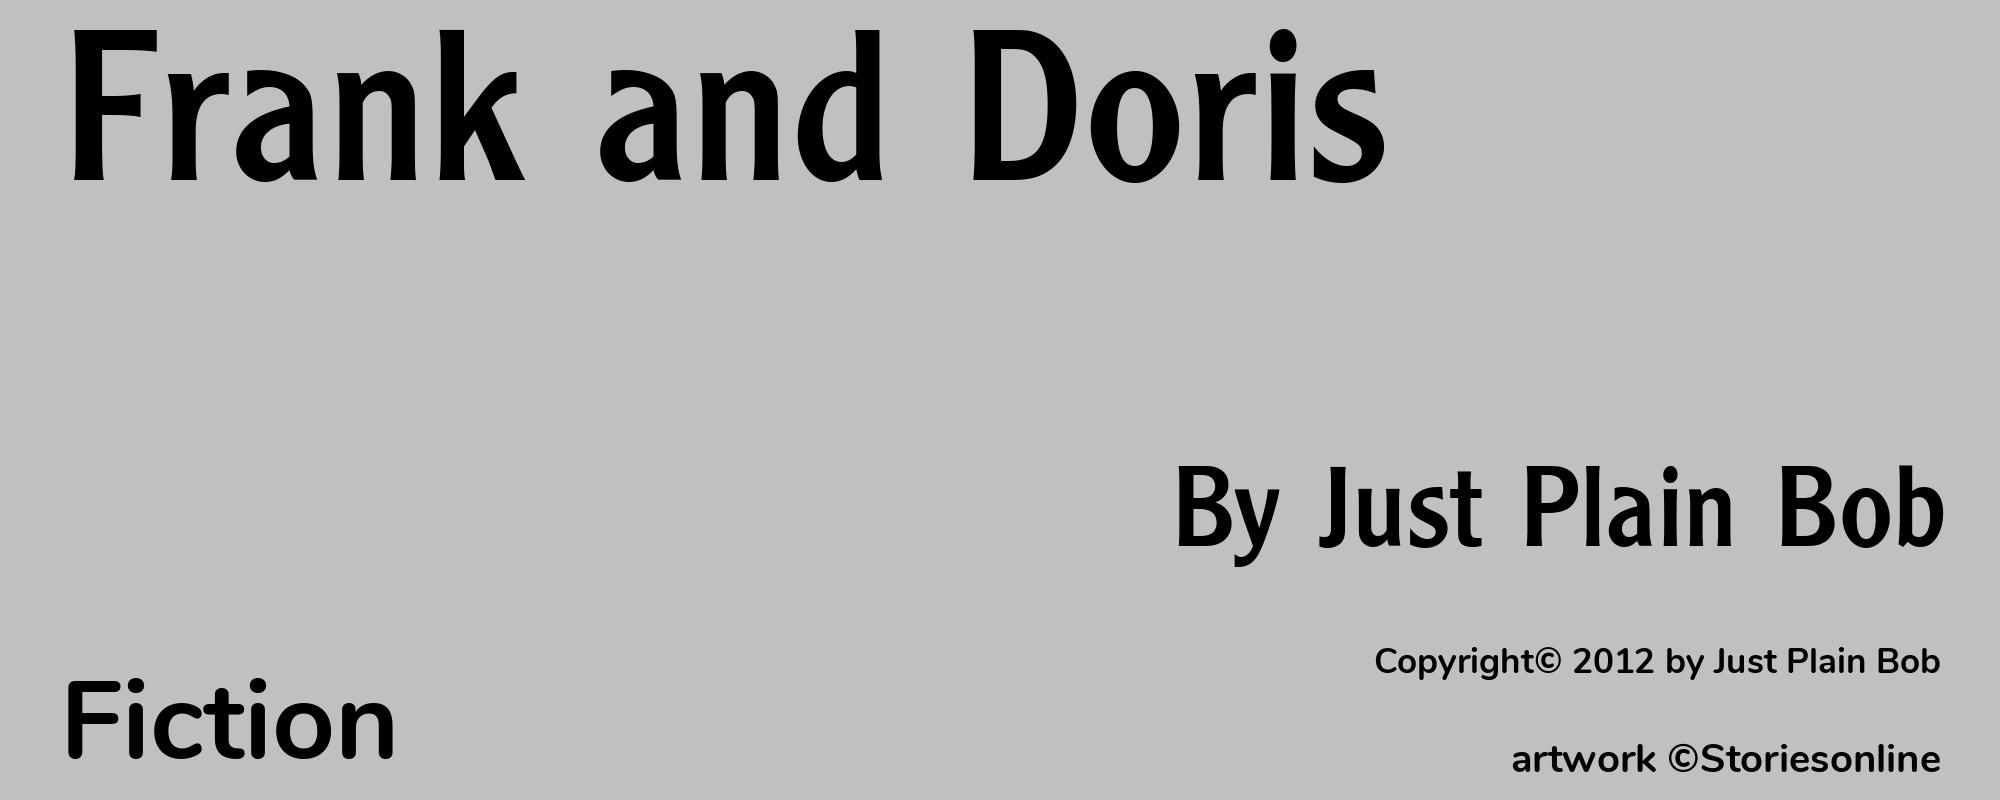 Frank and Doris - Cover